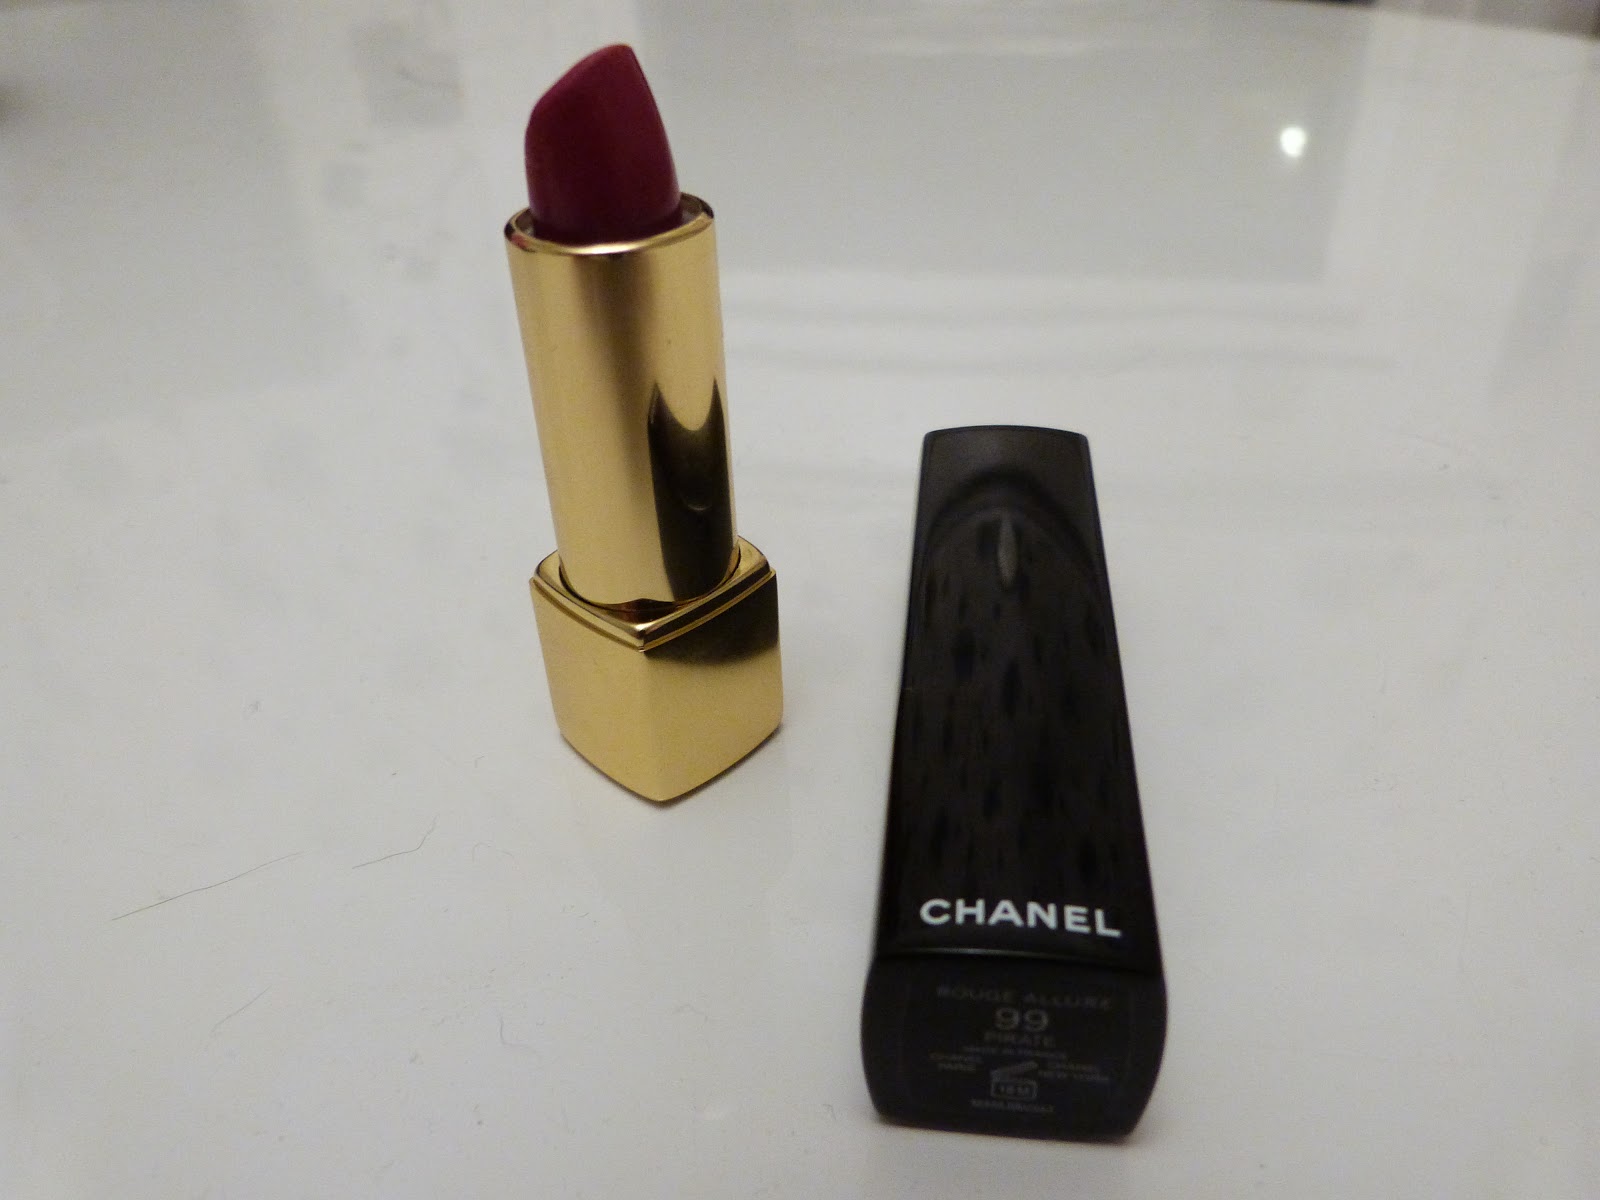 sbducky: Chanel Rouge Allure Pirate lipstick